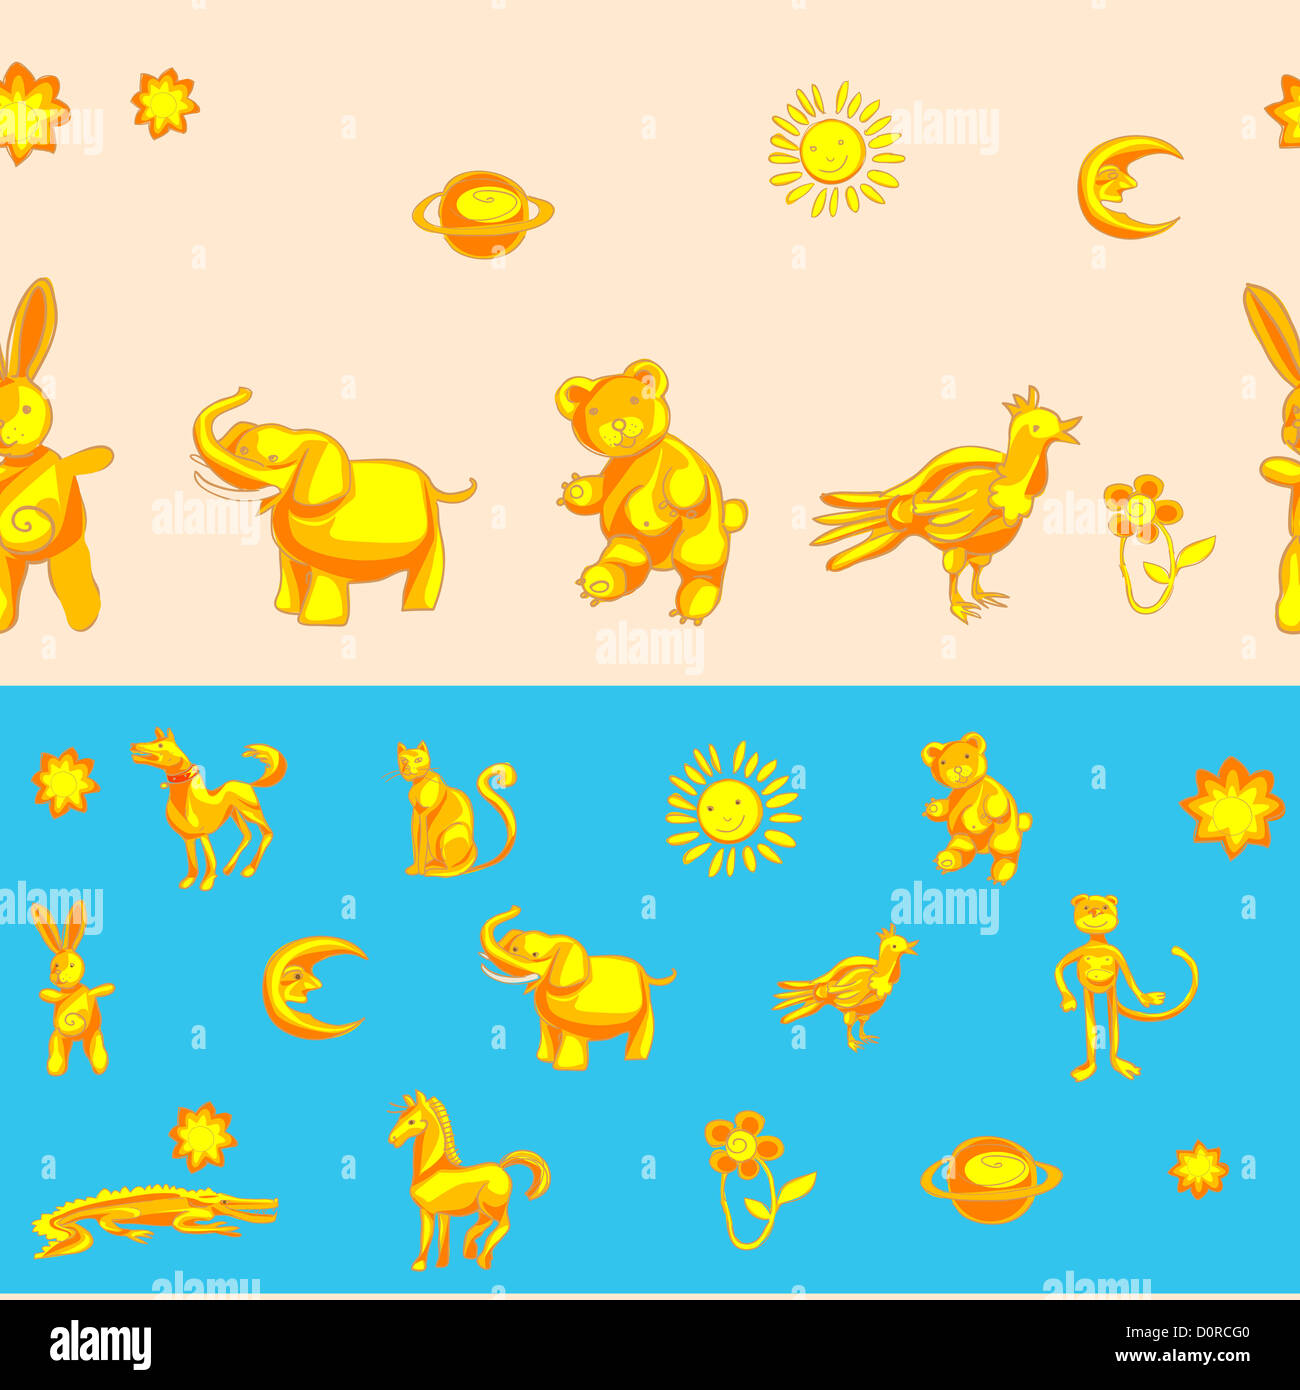 childlike pattern with animals Stock Photo